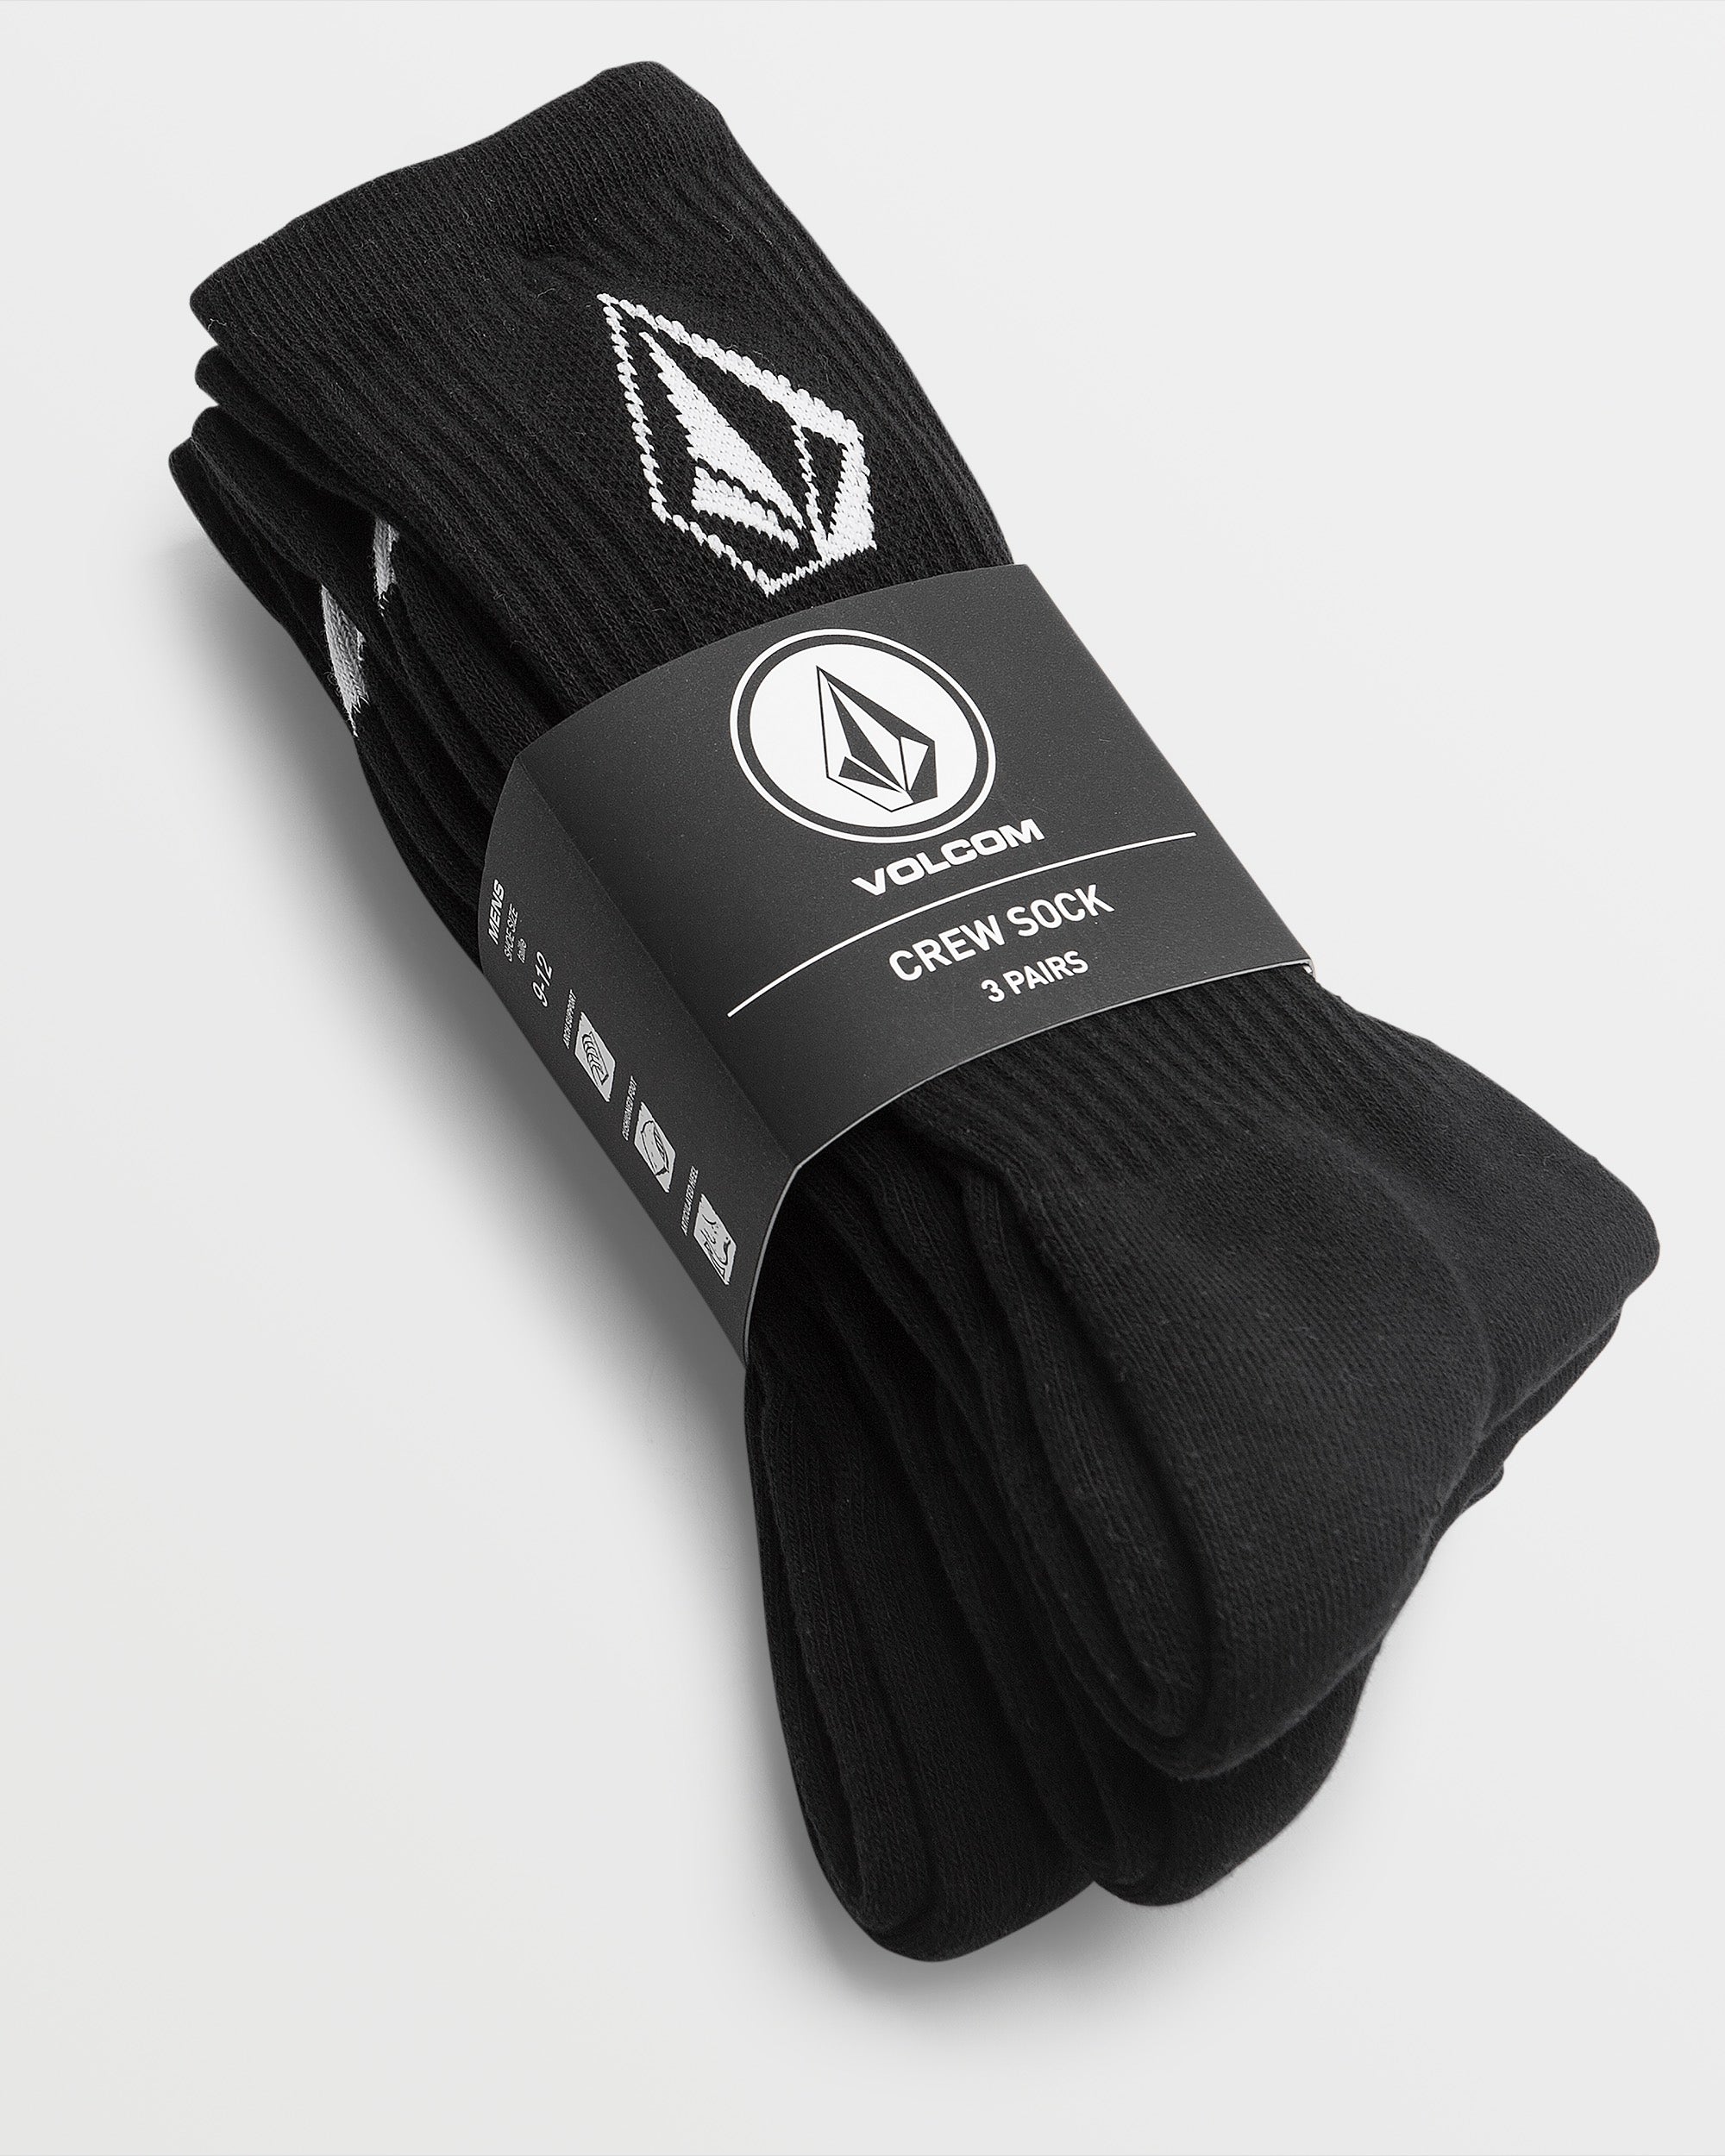 Buy BENCH Men's 3-in-1 Pack Foot Socks 2024 Online